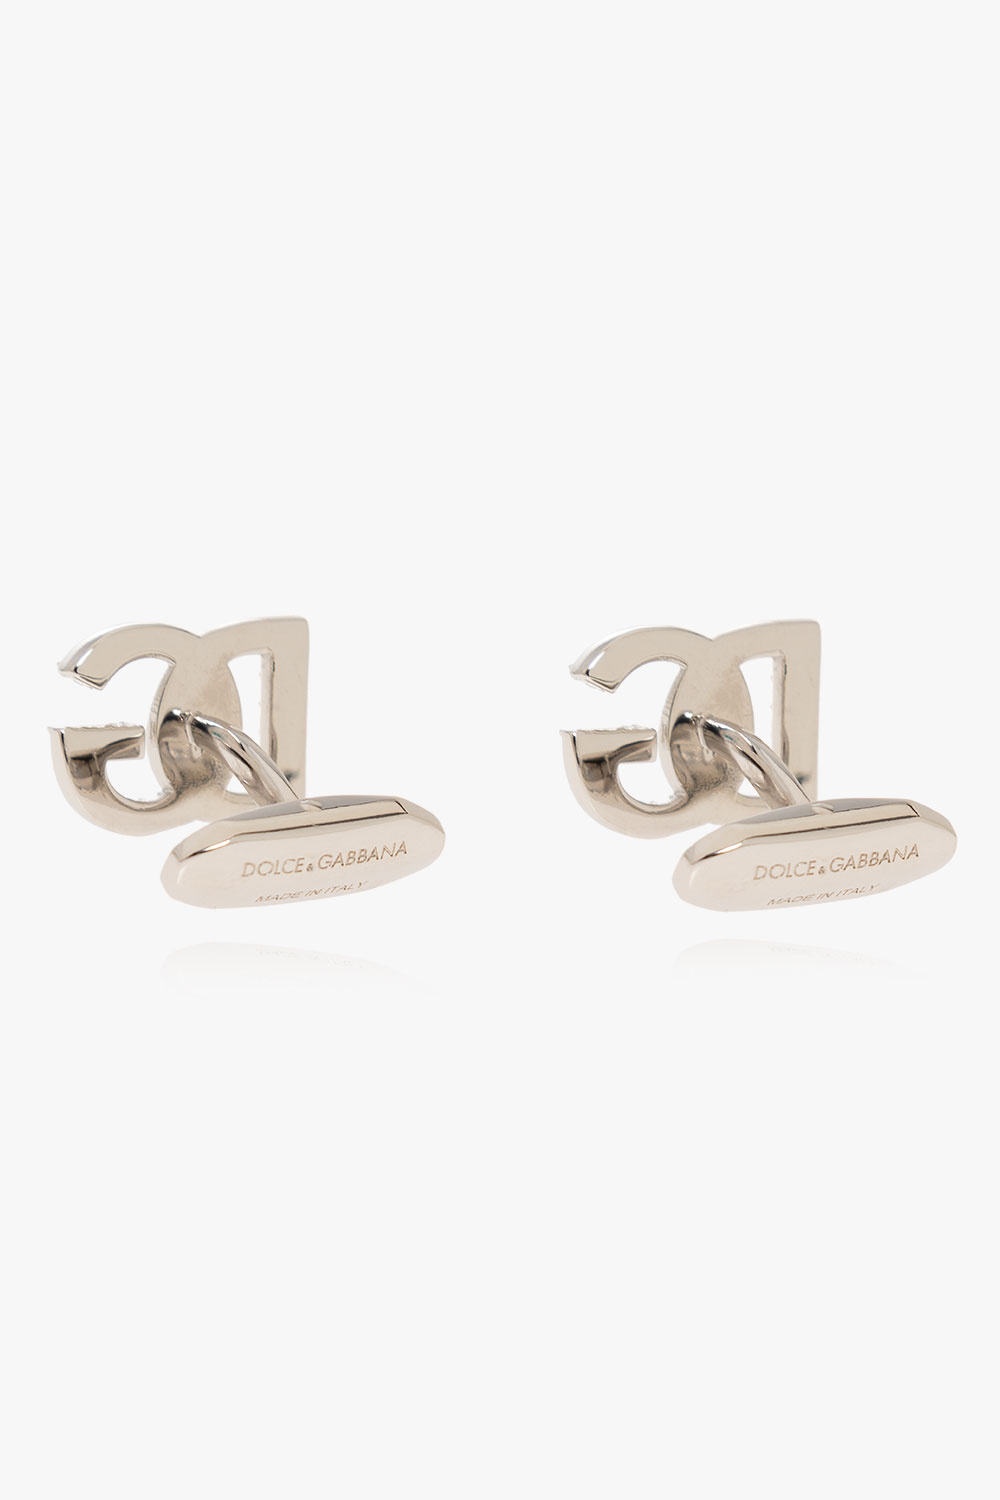 Dolce & Gabbana DG-medallion handbag Crystal cufflinks